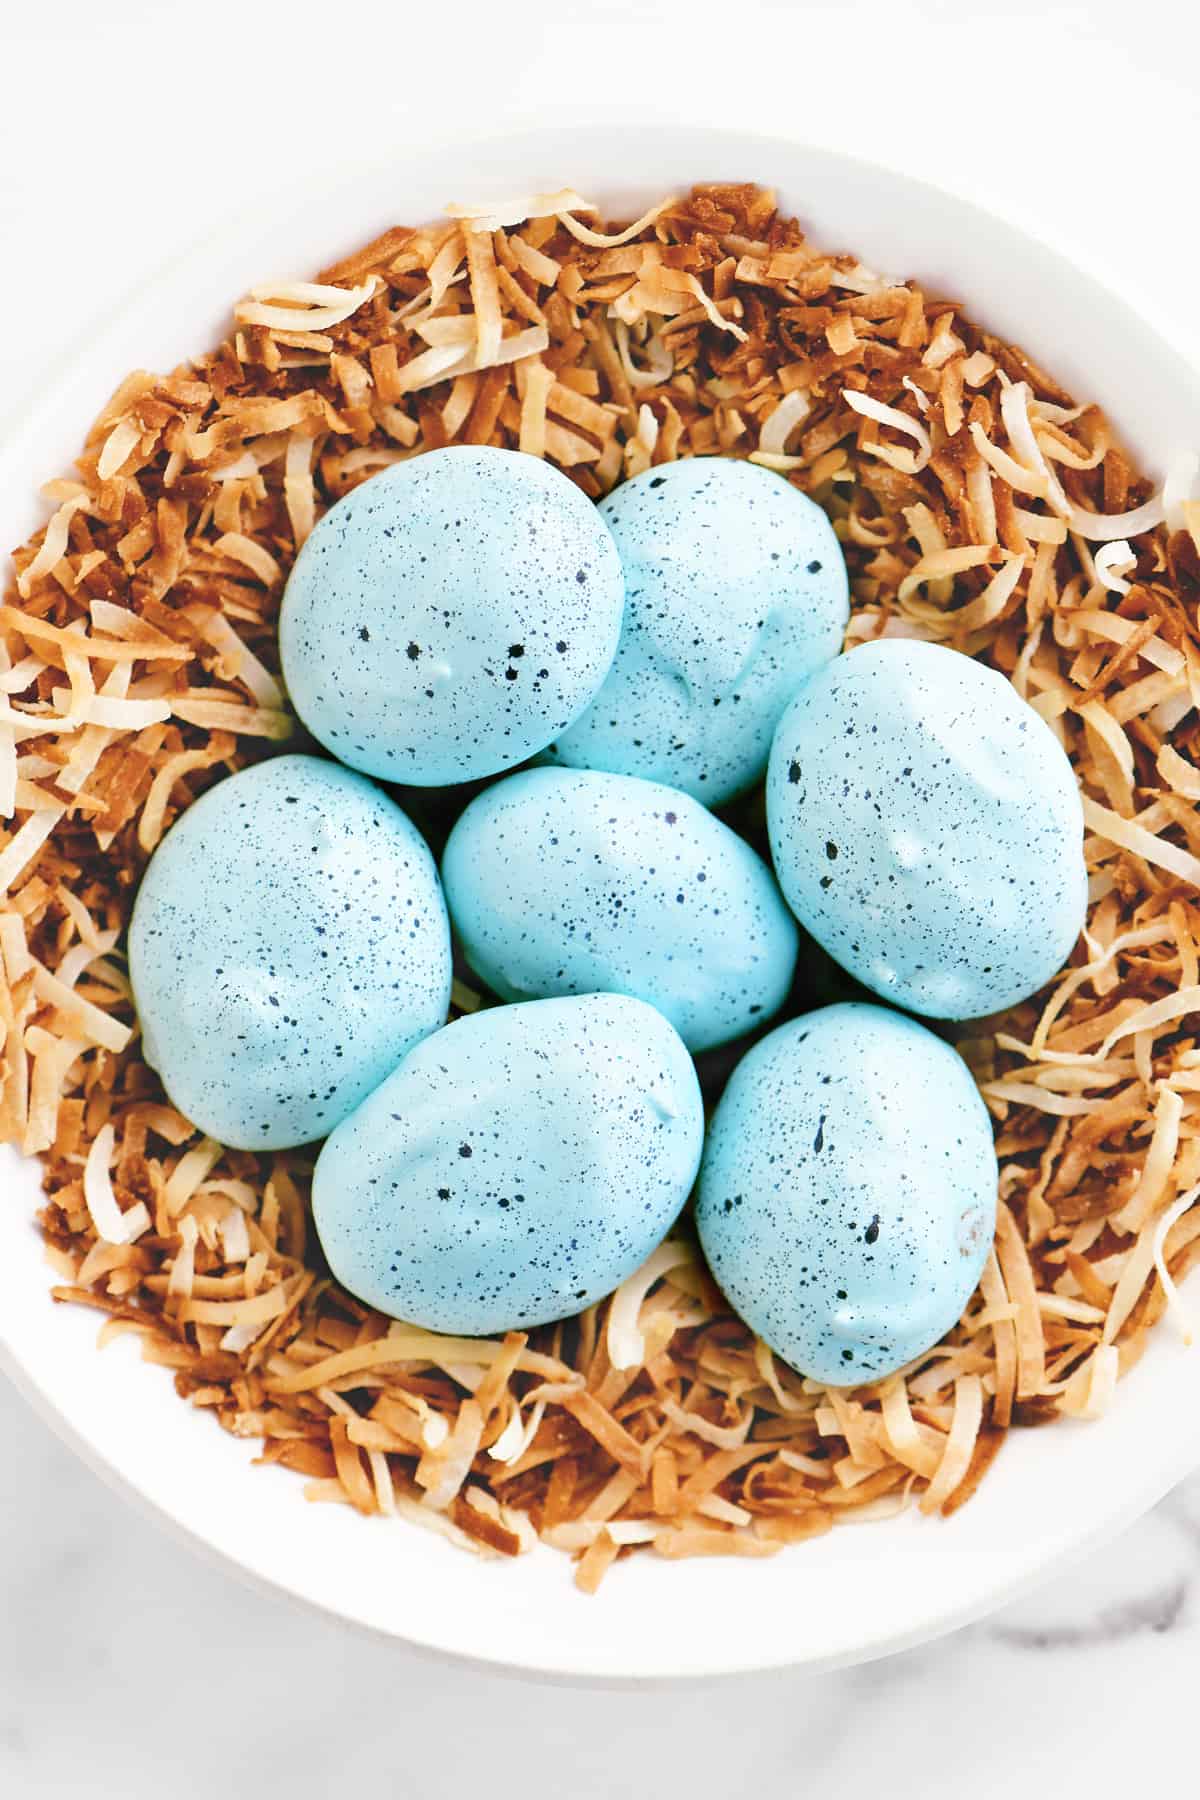 seven robins egg meringue cookies in a bowl